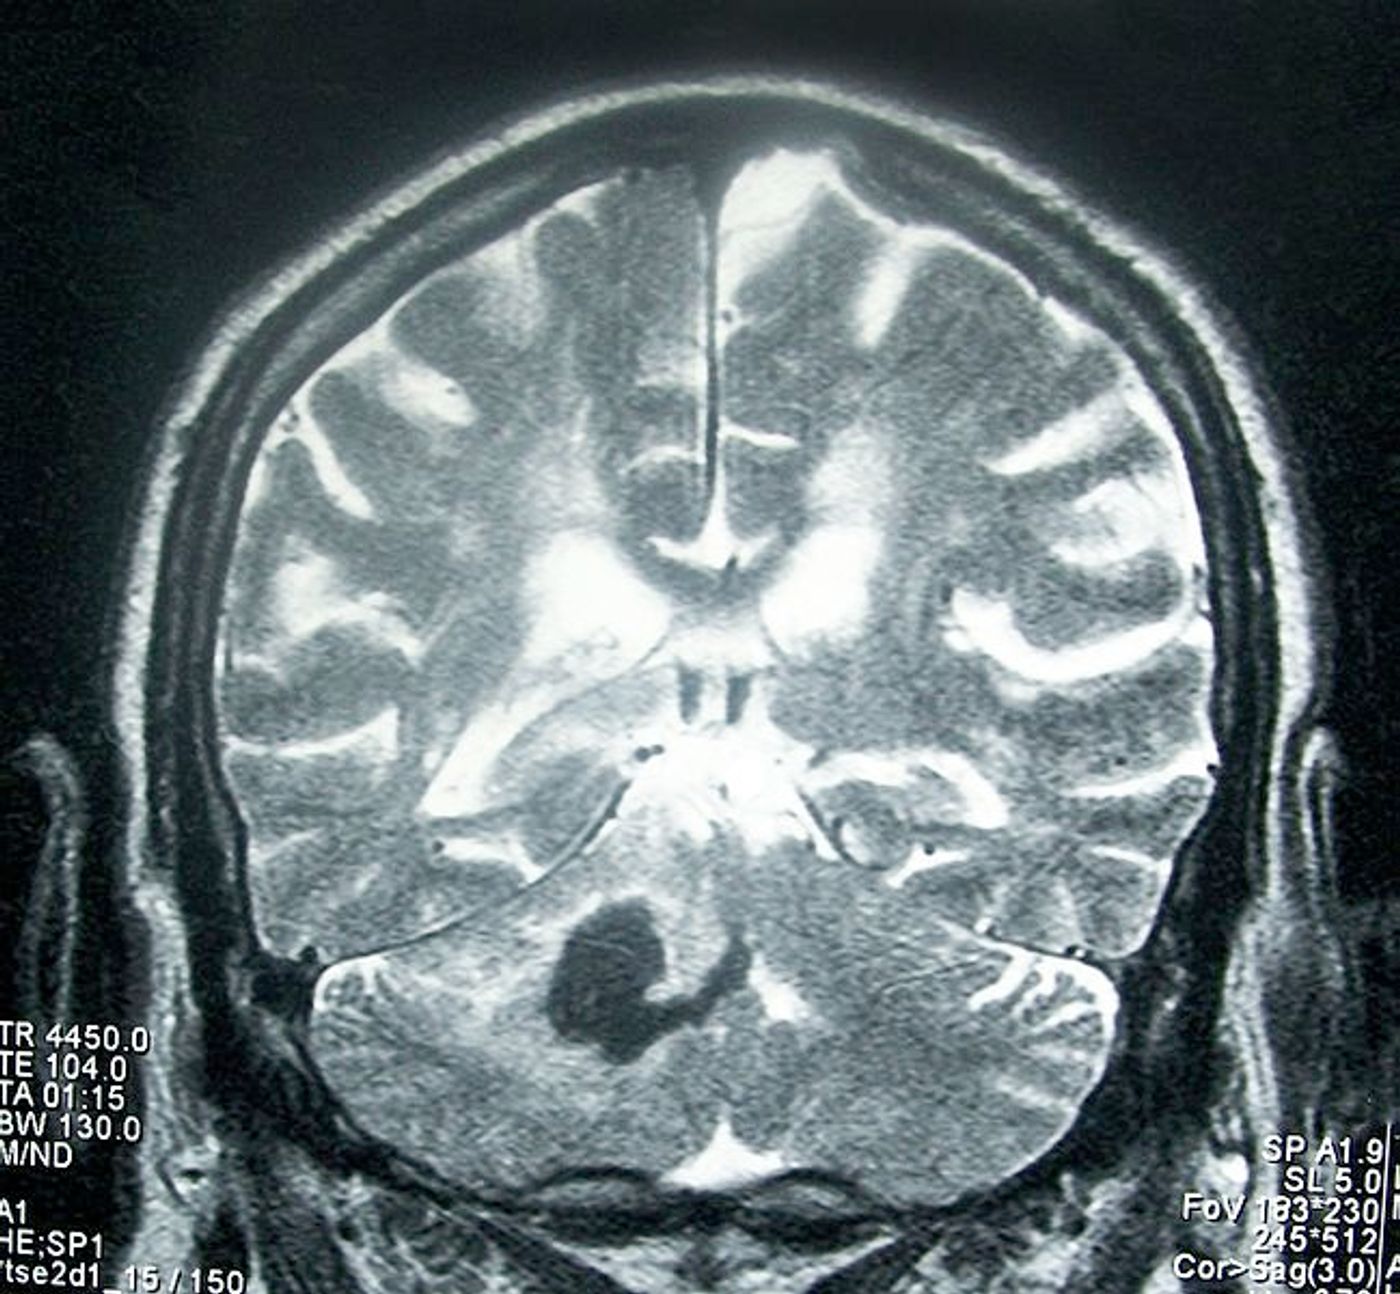 Head MRI showing deep intracerebral hemorrhage (cerebellum). Credit: WIkimedia User Bobjgalindo